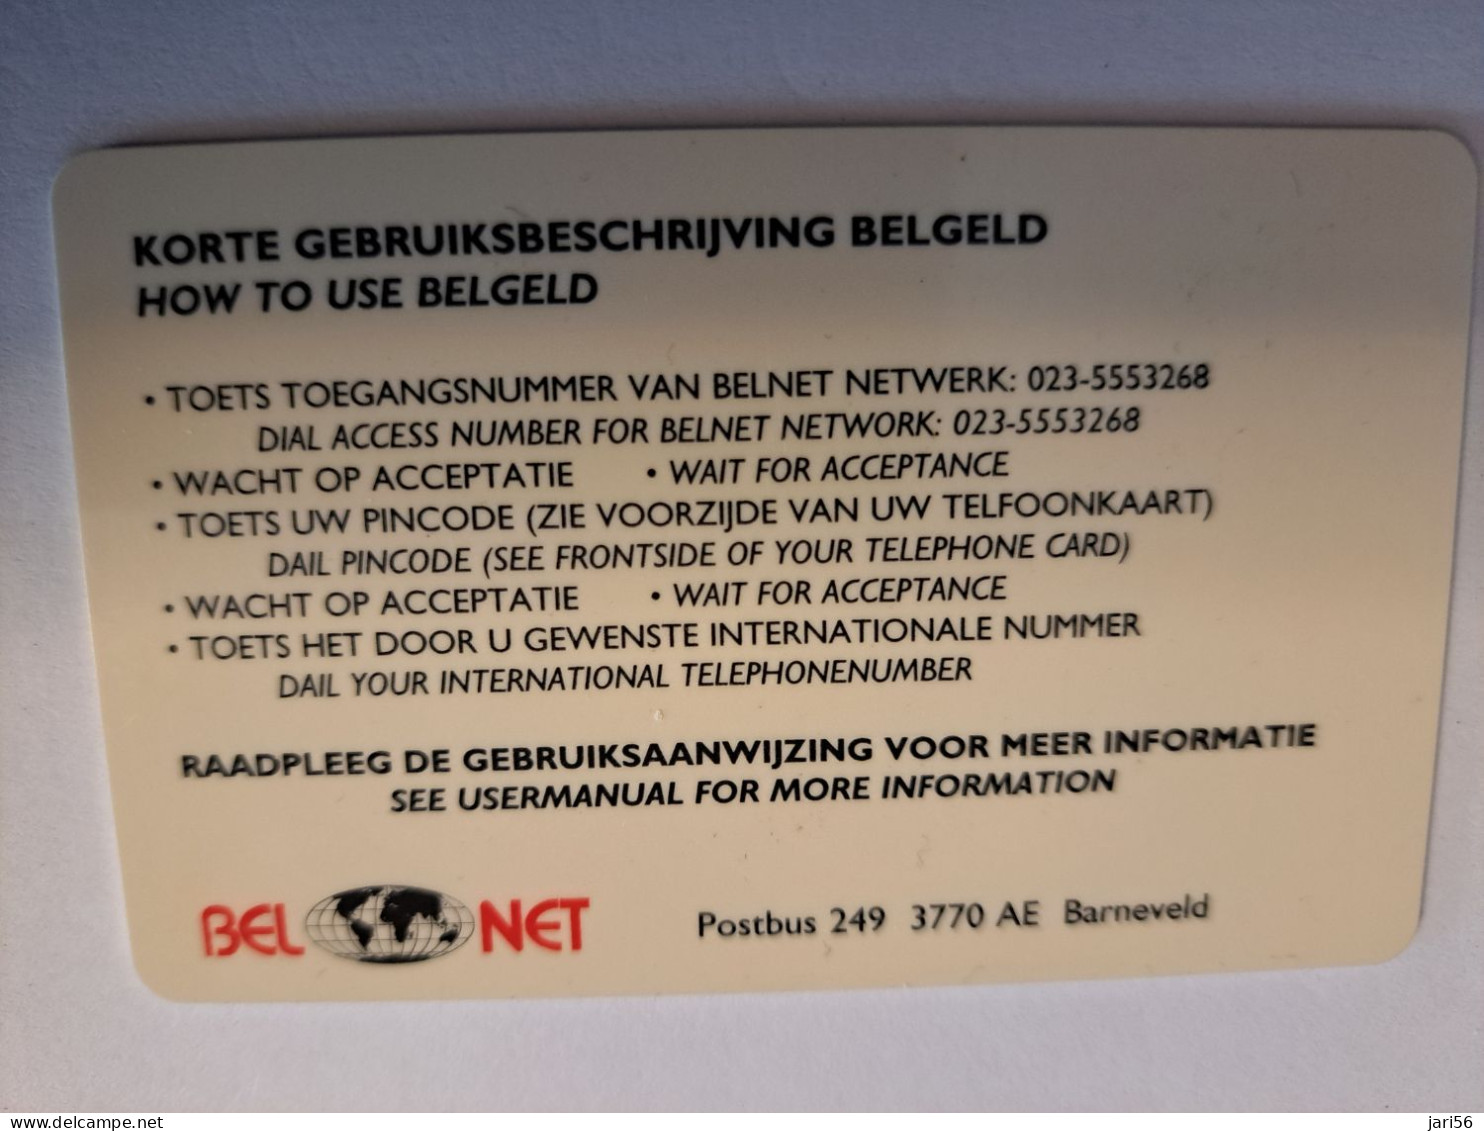 NETHERLANDS  PREPAID / HFL 50,- / INDONESIA / BEL NET/ BELGELD/ THICK CARD  / / OLDER CARD ! / USED  CARD   ** 16219** - Schede GSM, Prepagate E Ricariche